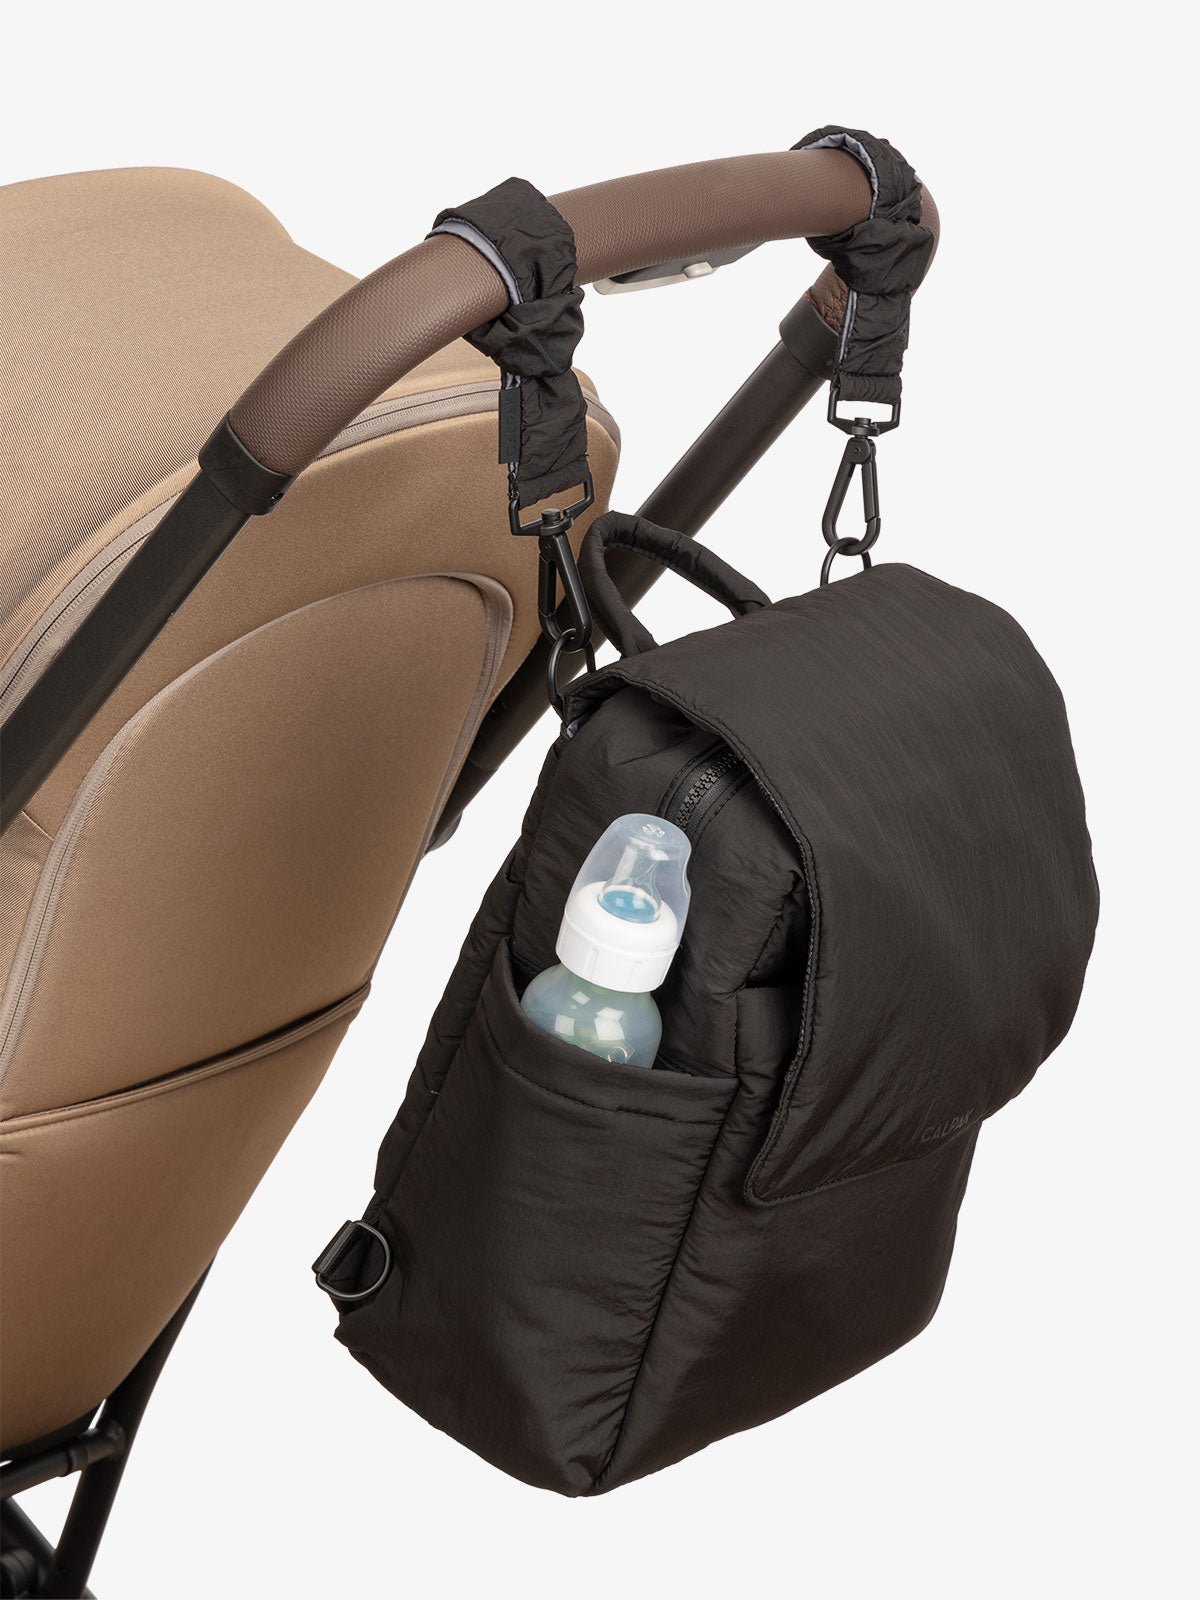 CALPAK Convertible Mini Diaper Backpack attached to stroller by CALPAK Stroller Straps in black